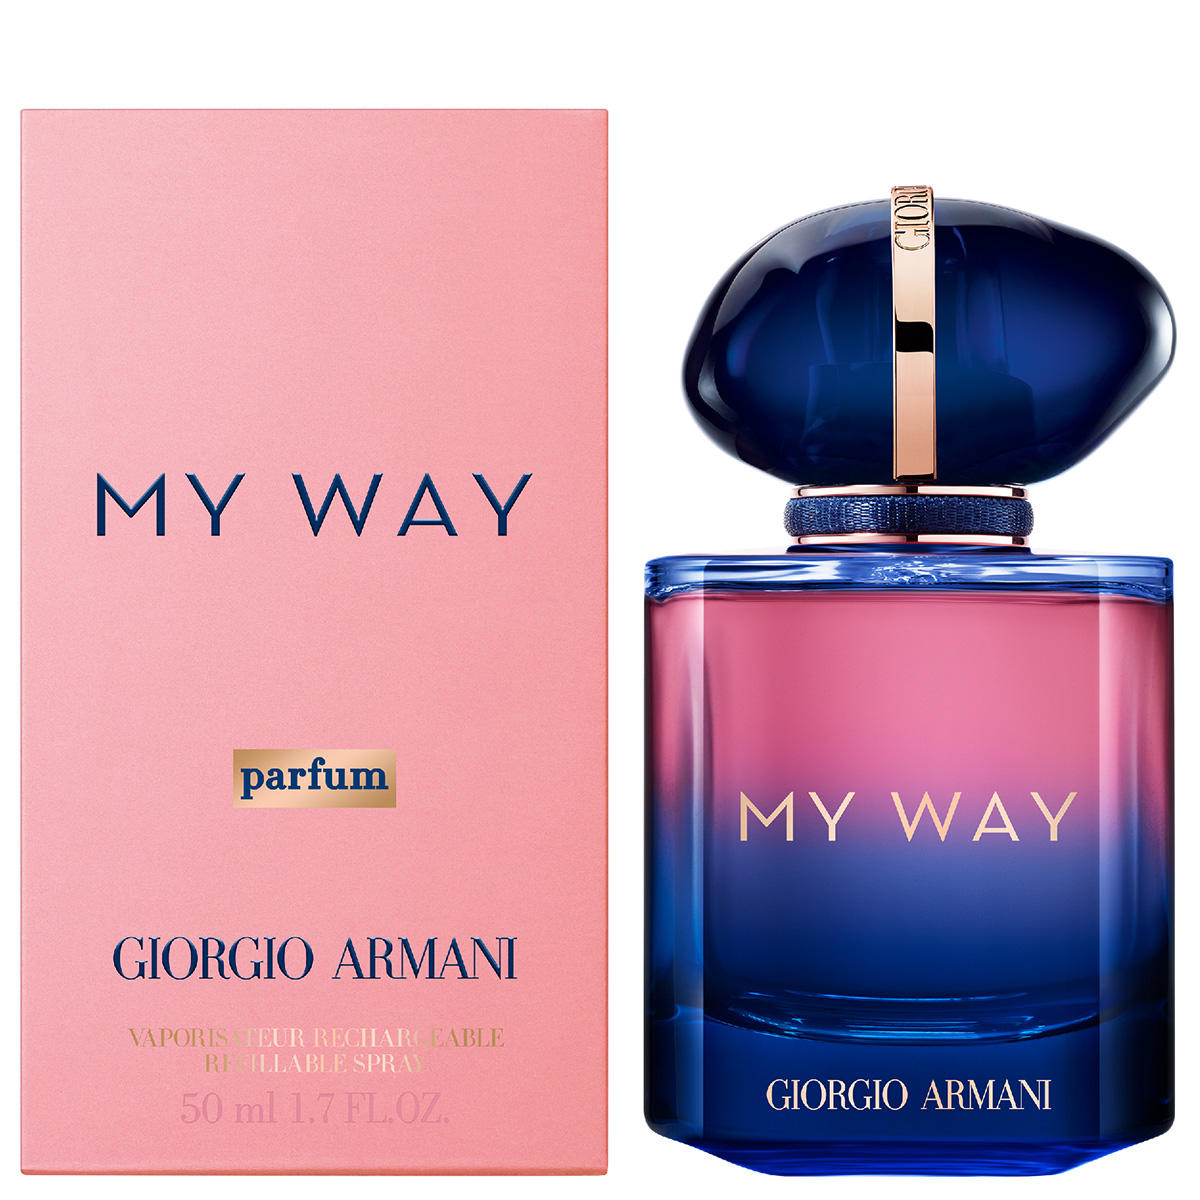 Giorgio Armani My Way Le Parfum 50 ml - 2